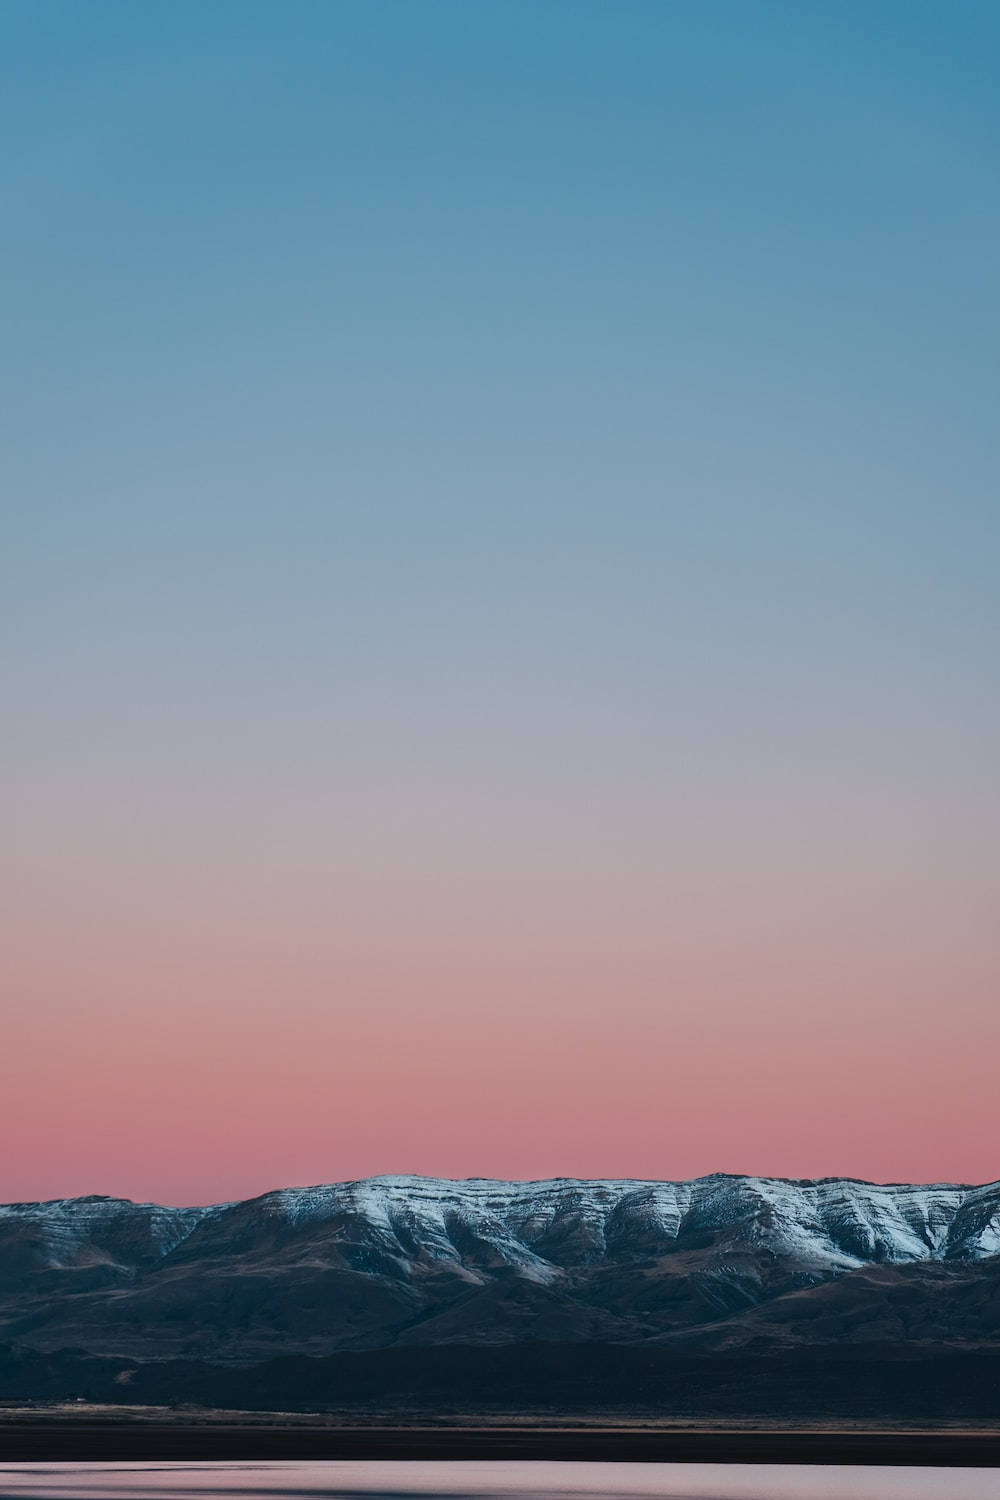 Popular Phone Snowy Mountain Range Wallpaper